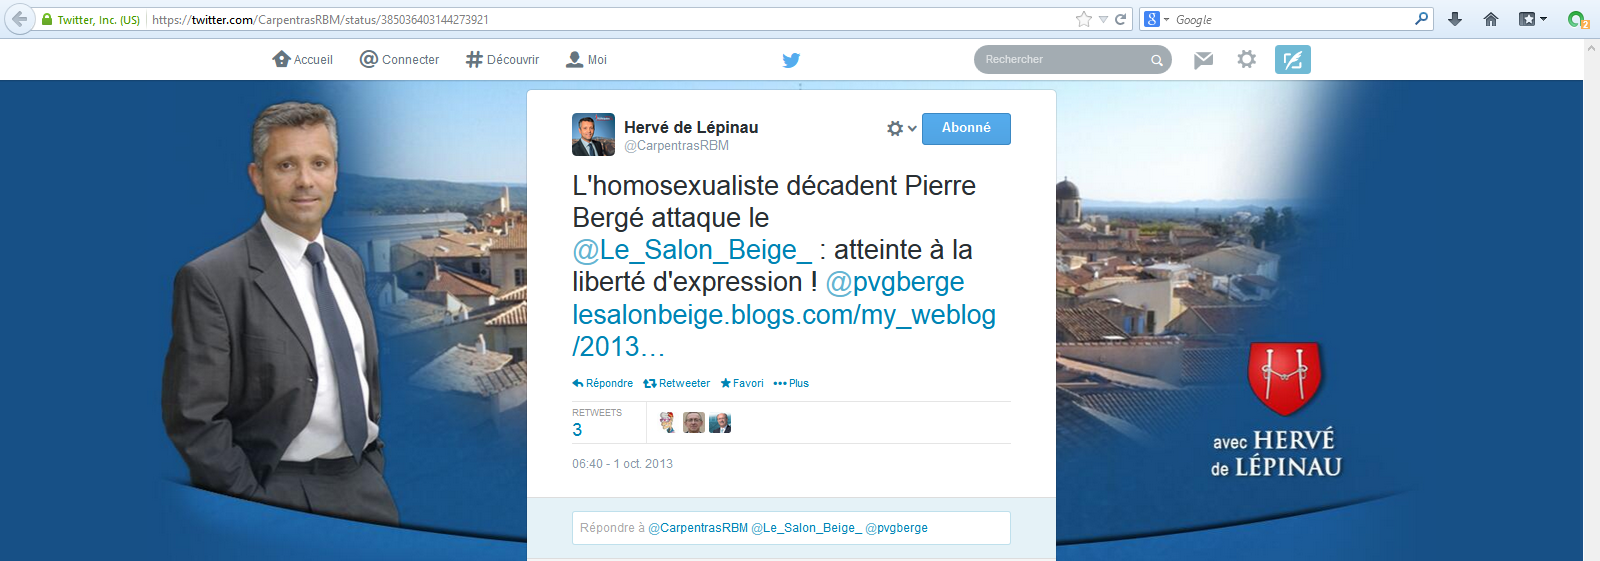 Herve-de-Lepinau-homosexualiste